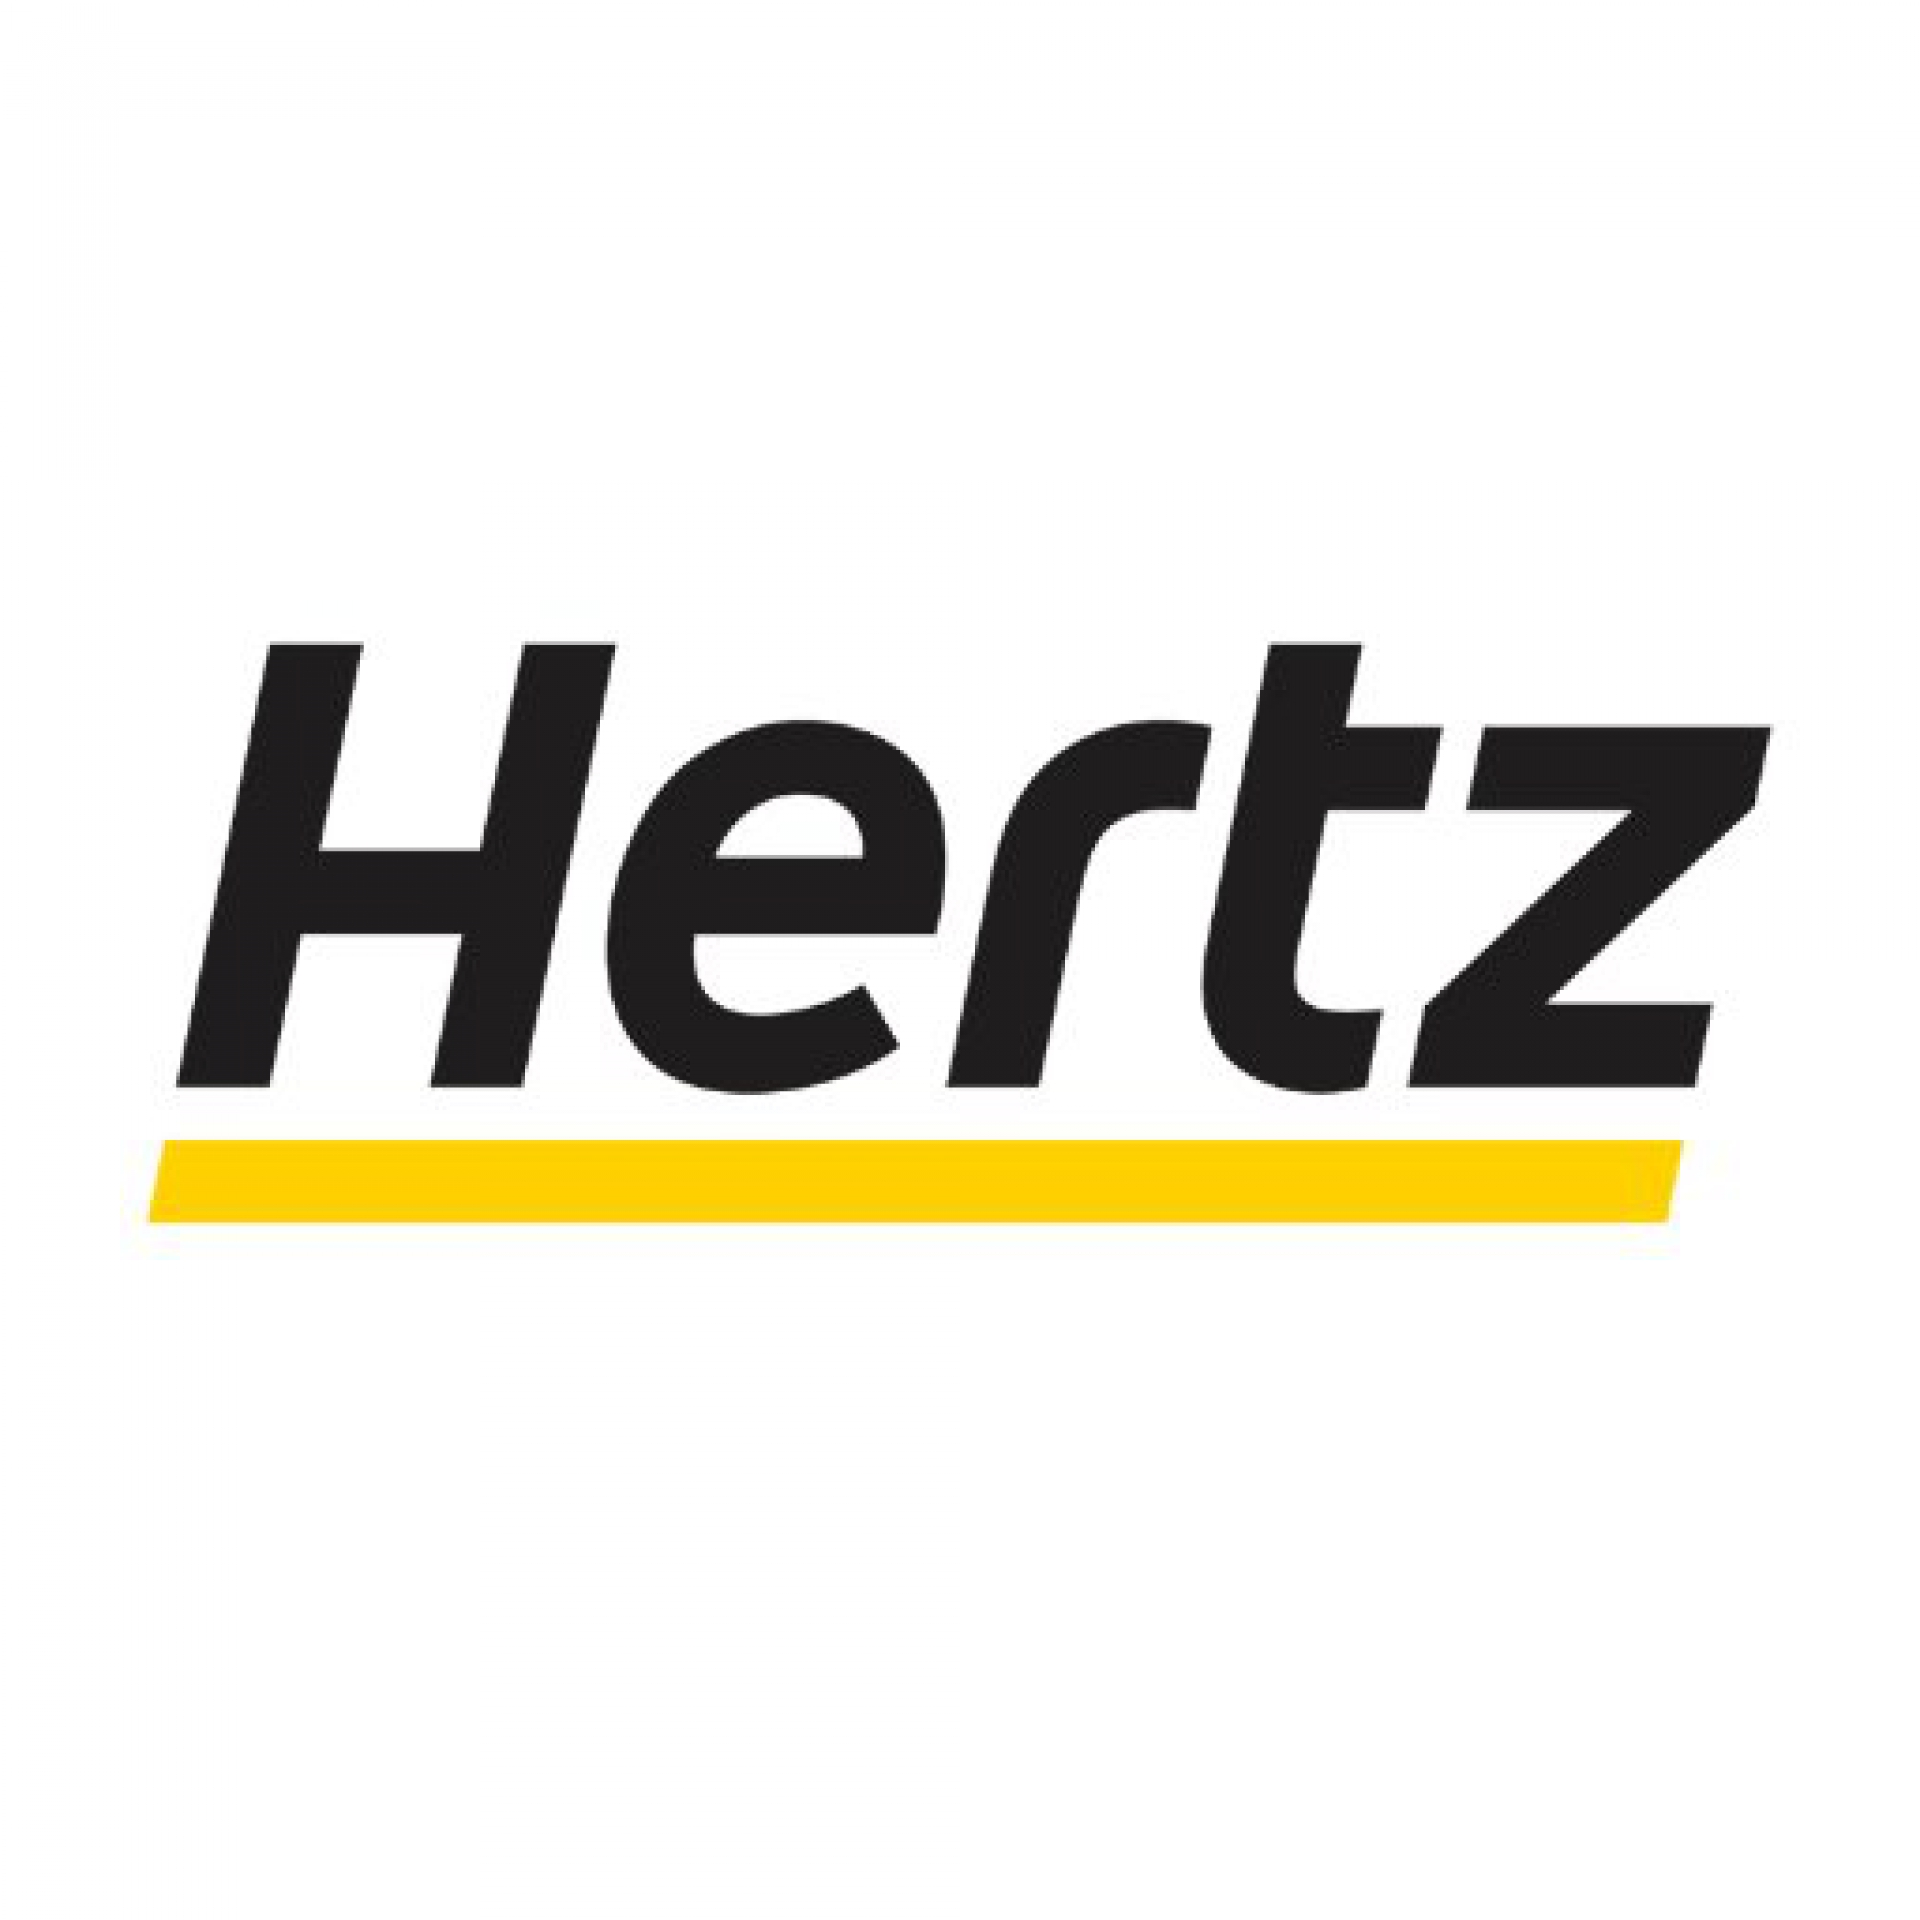 Hertz España